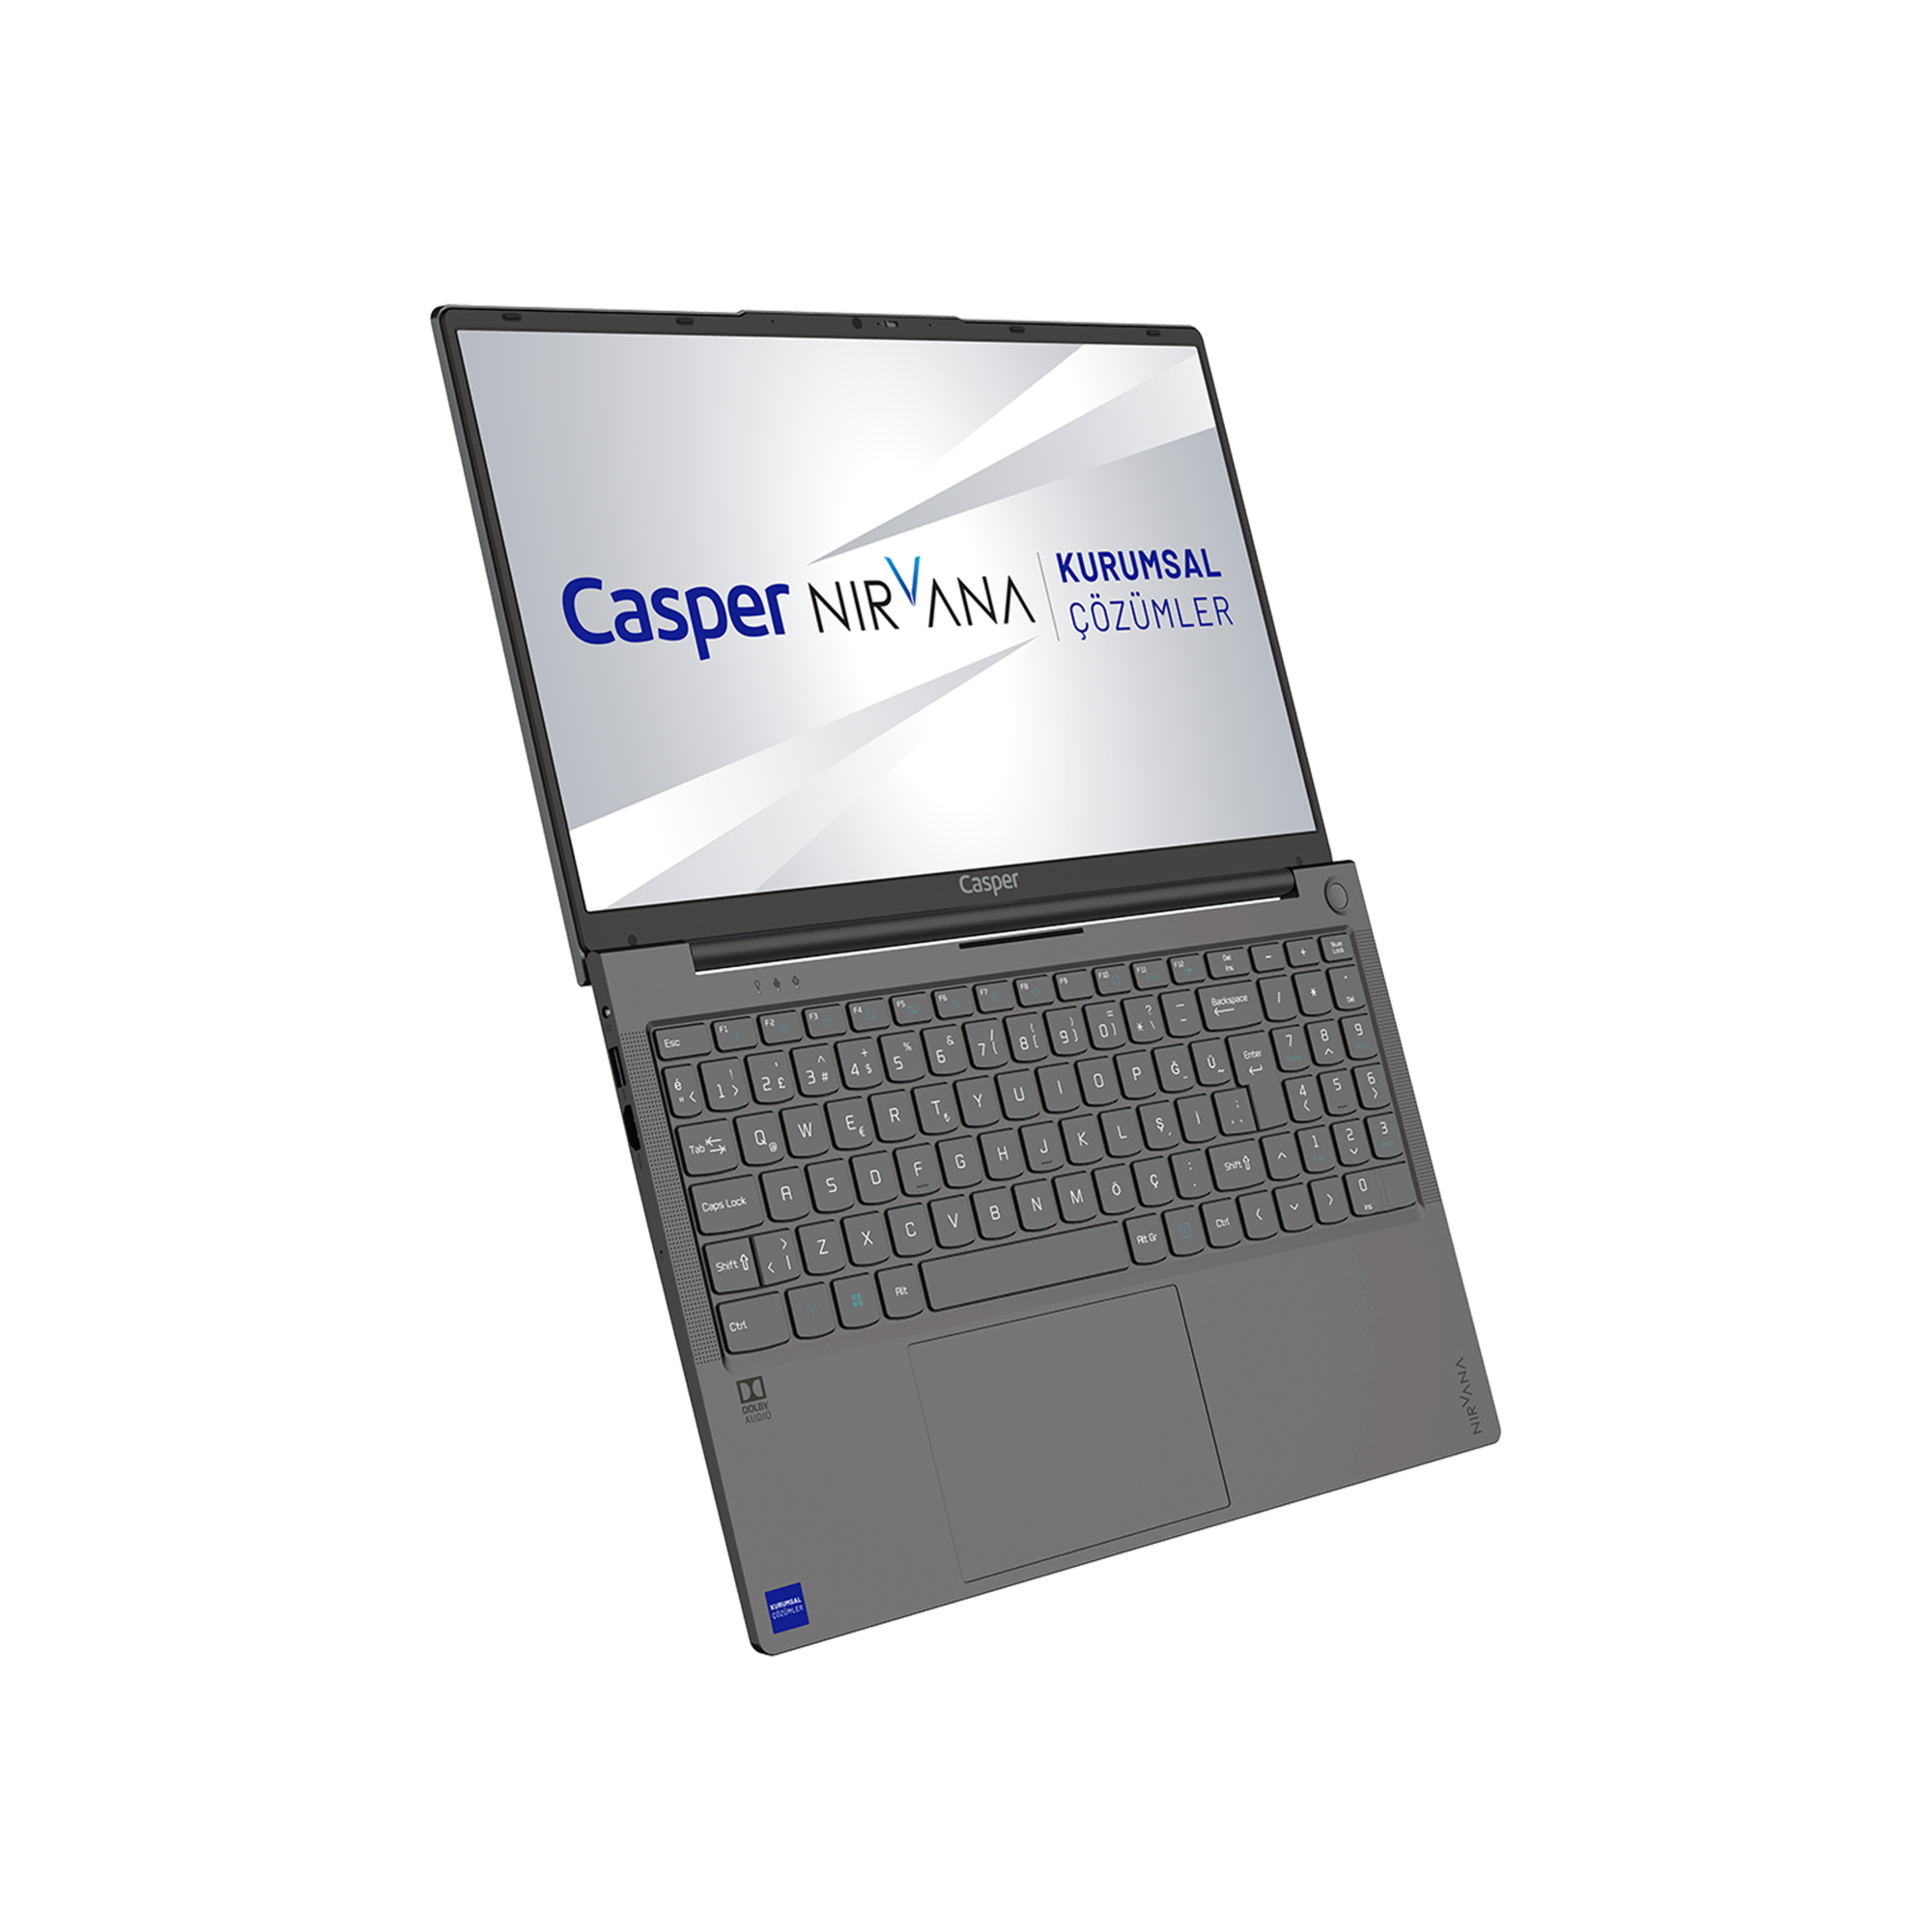 Casper Nirvana Ryzen 5 8E00T Laptop